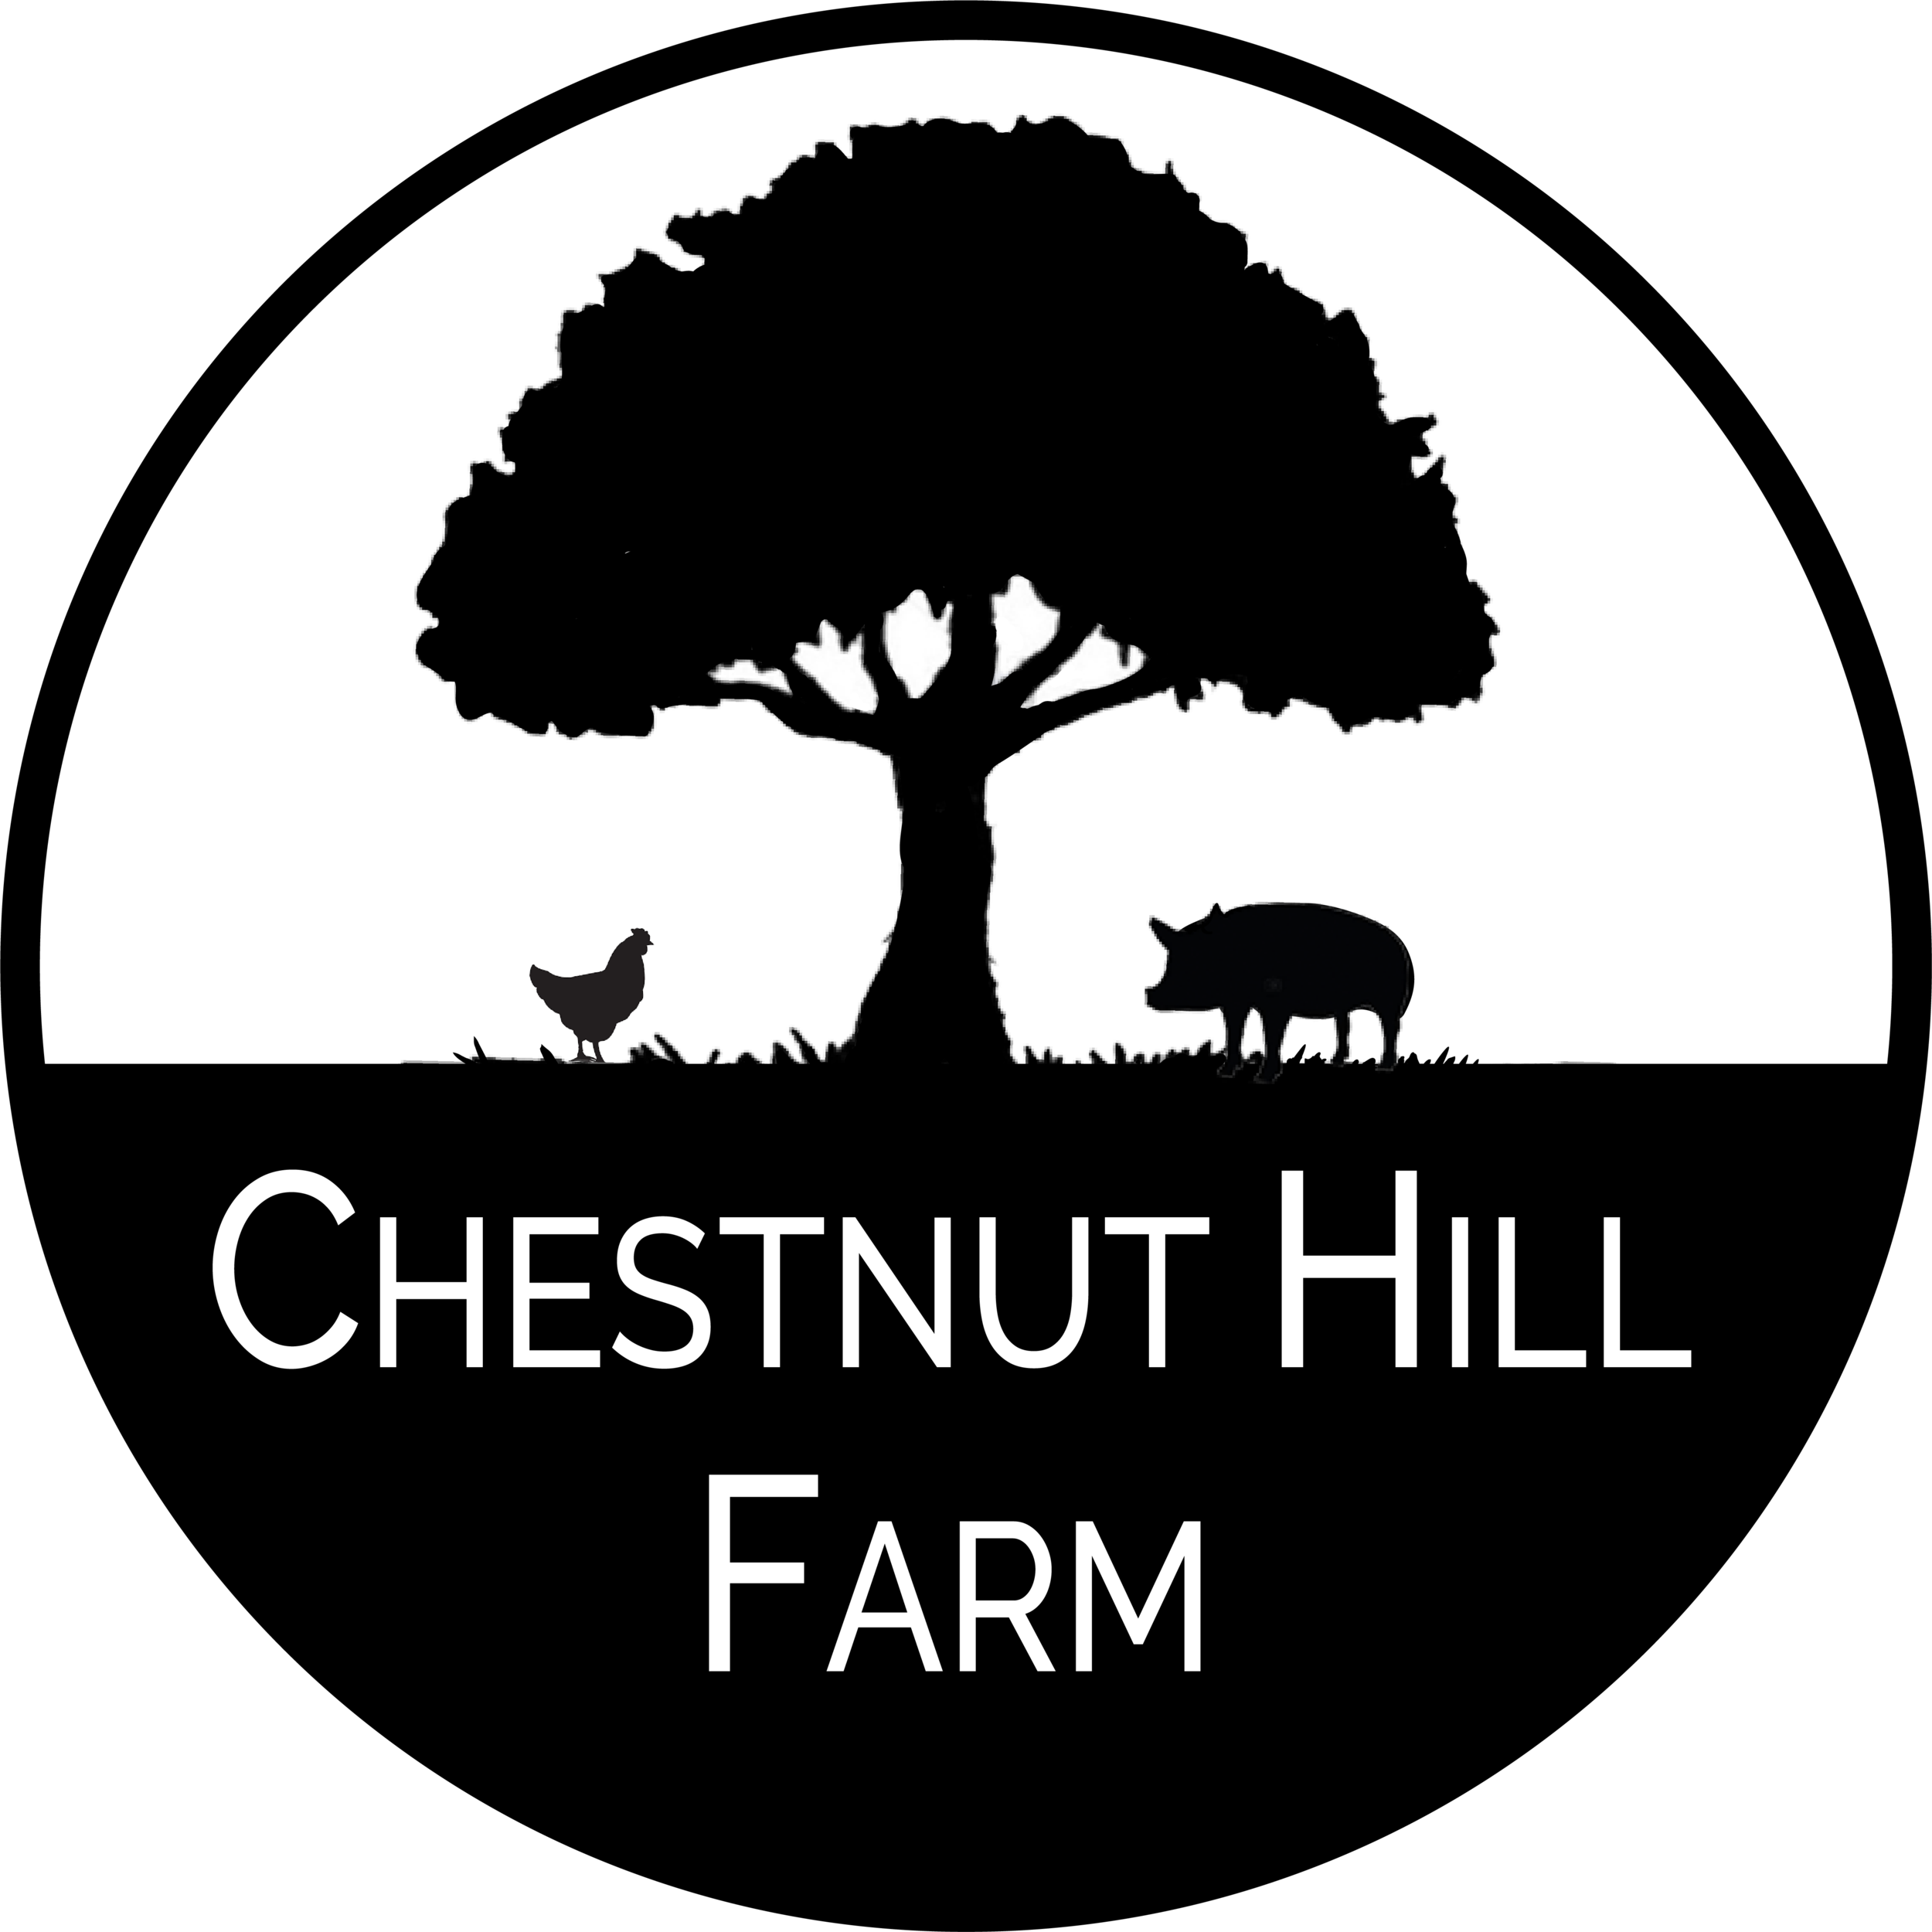 Chestnut Hill farm